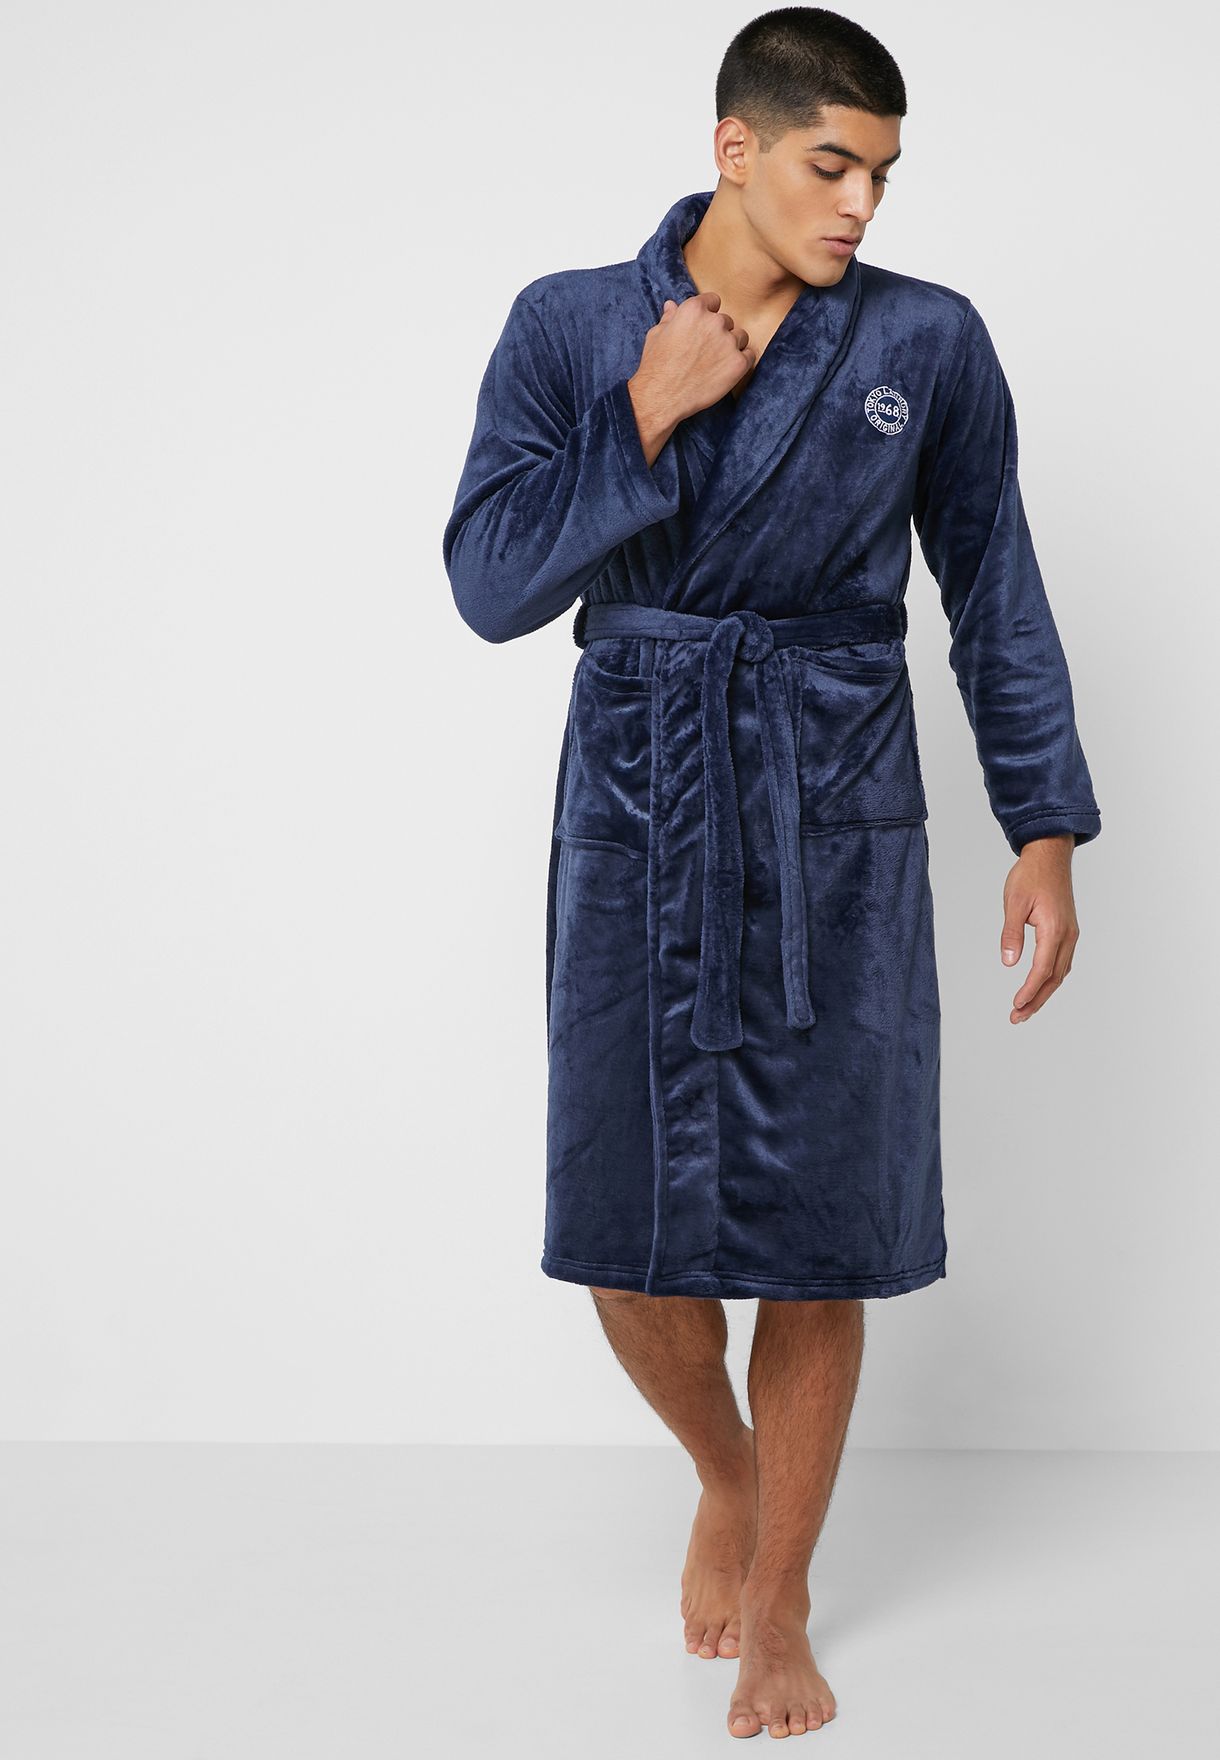 Tokyo Laundry Men's Dressing Gown Soft Luxury Fleece Tie Waist Bath Robe Thick